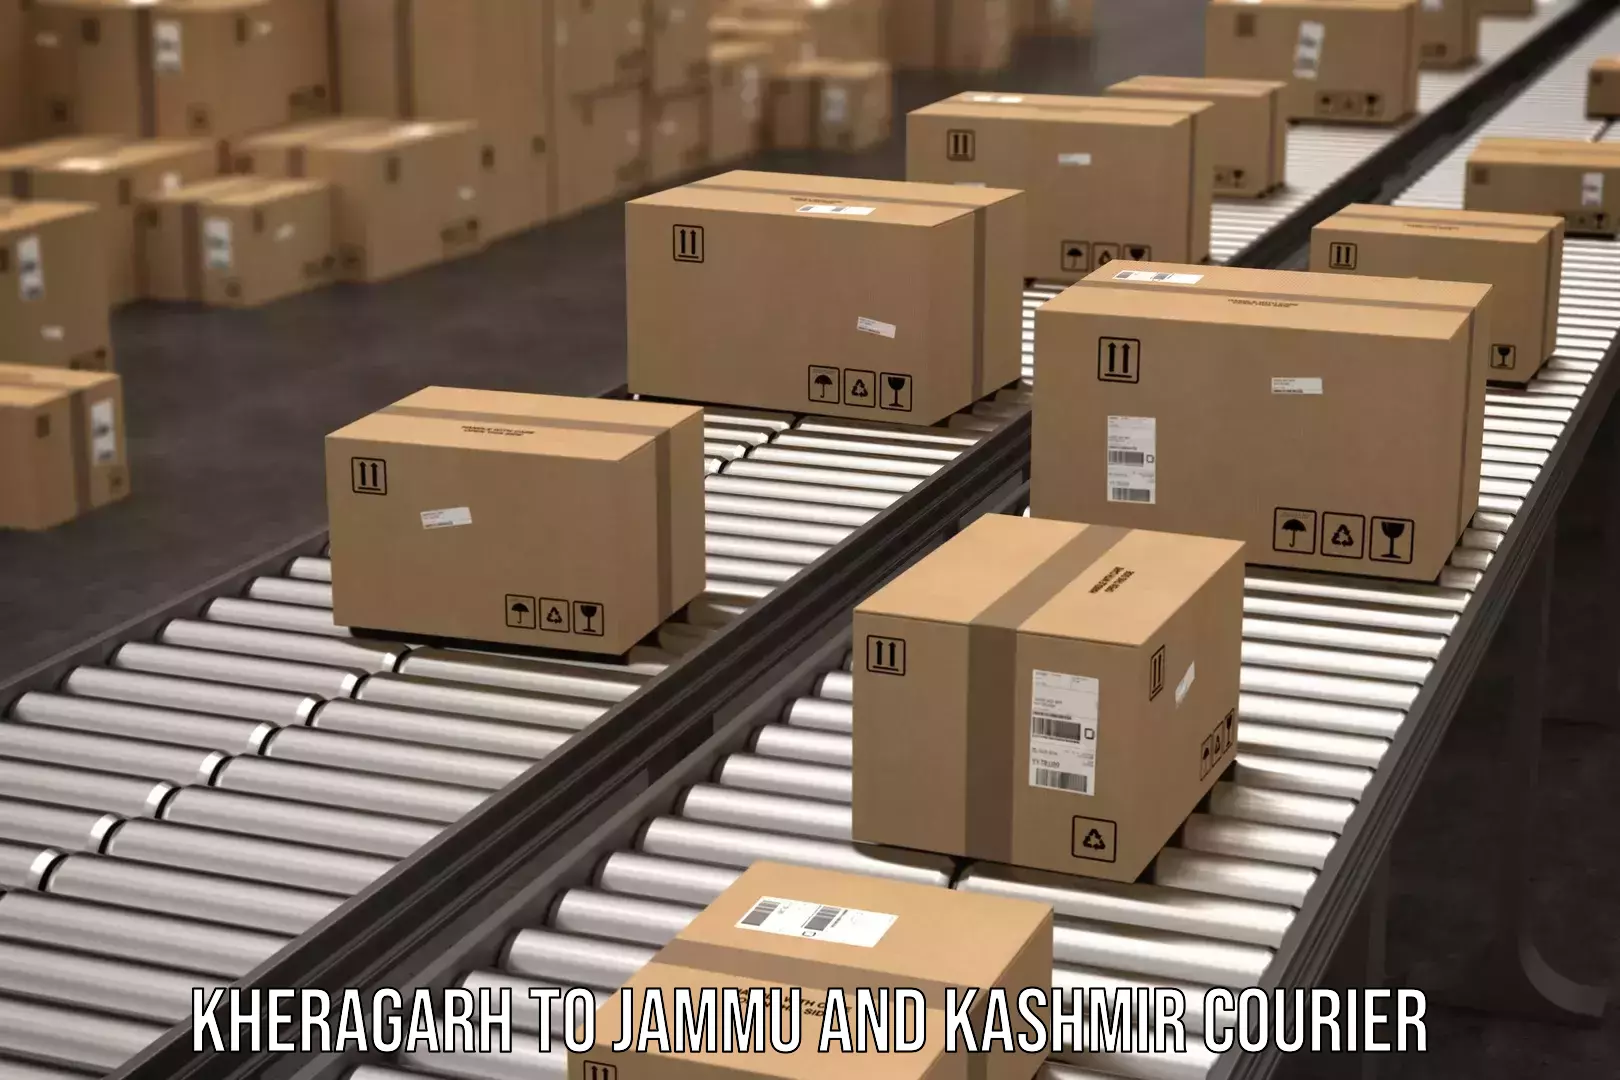 24-hour courier service Kheragarh to Nagrota